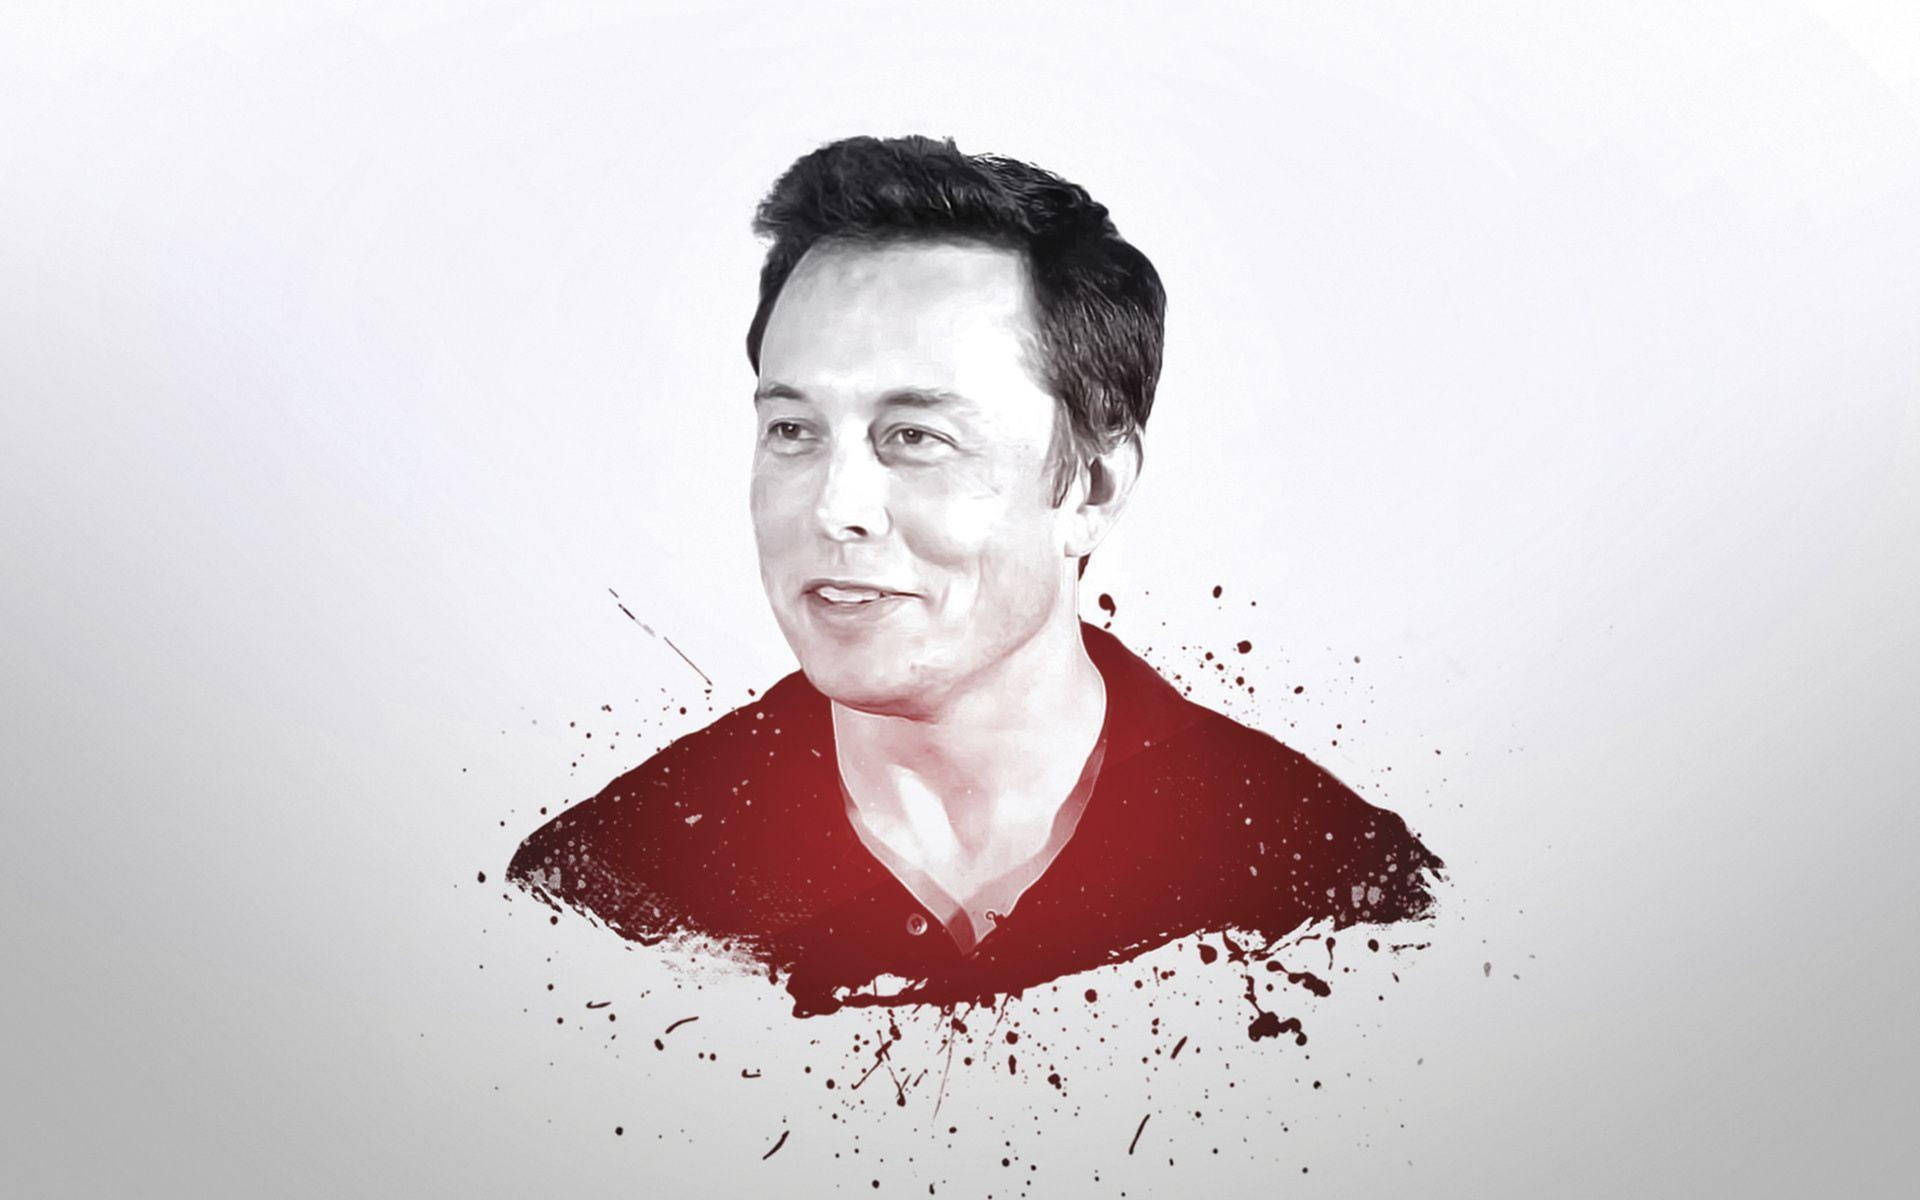 Elon Musk Abstract Portrait Background